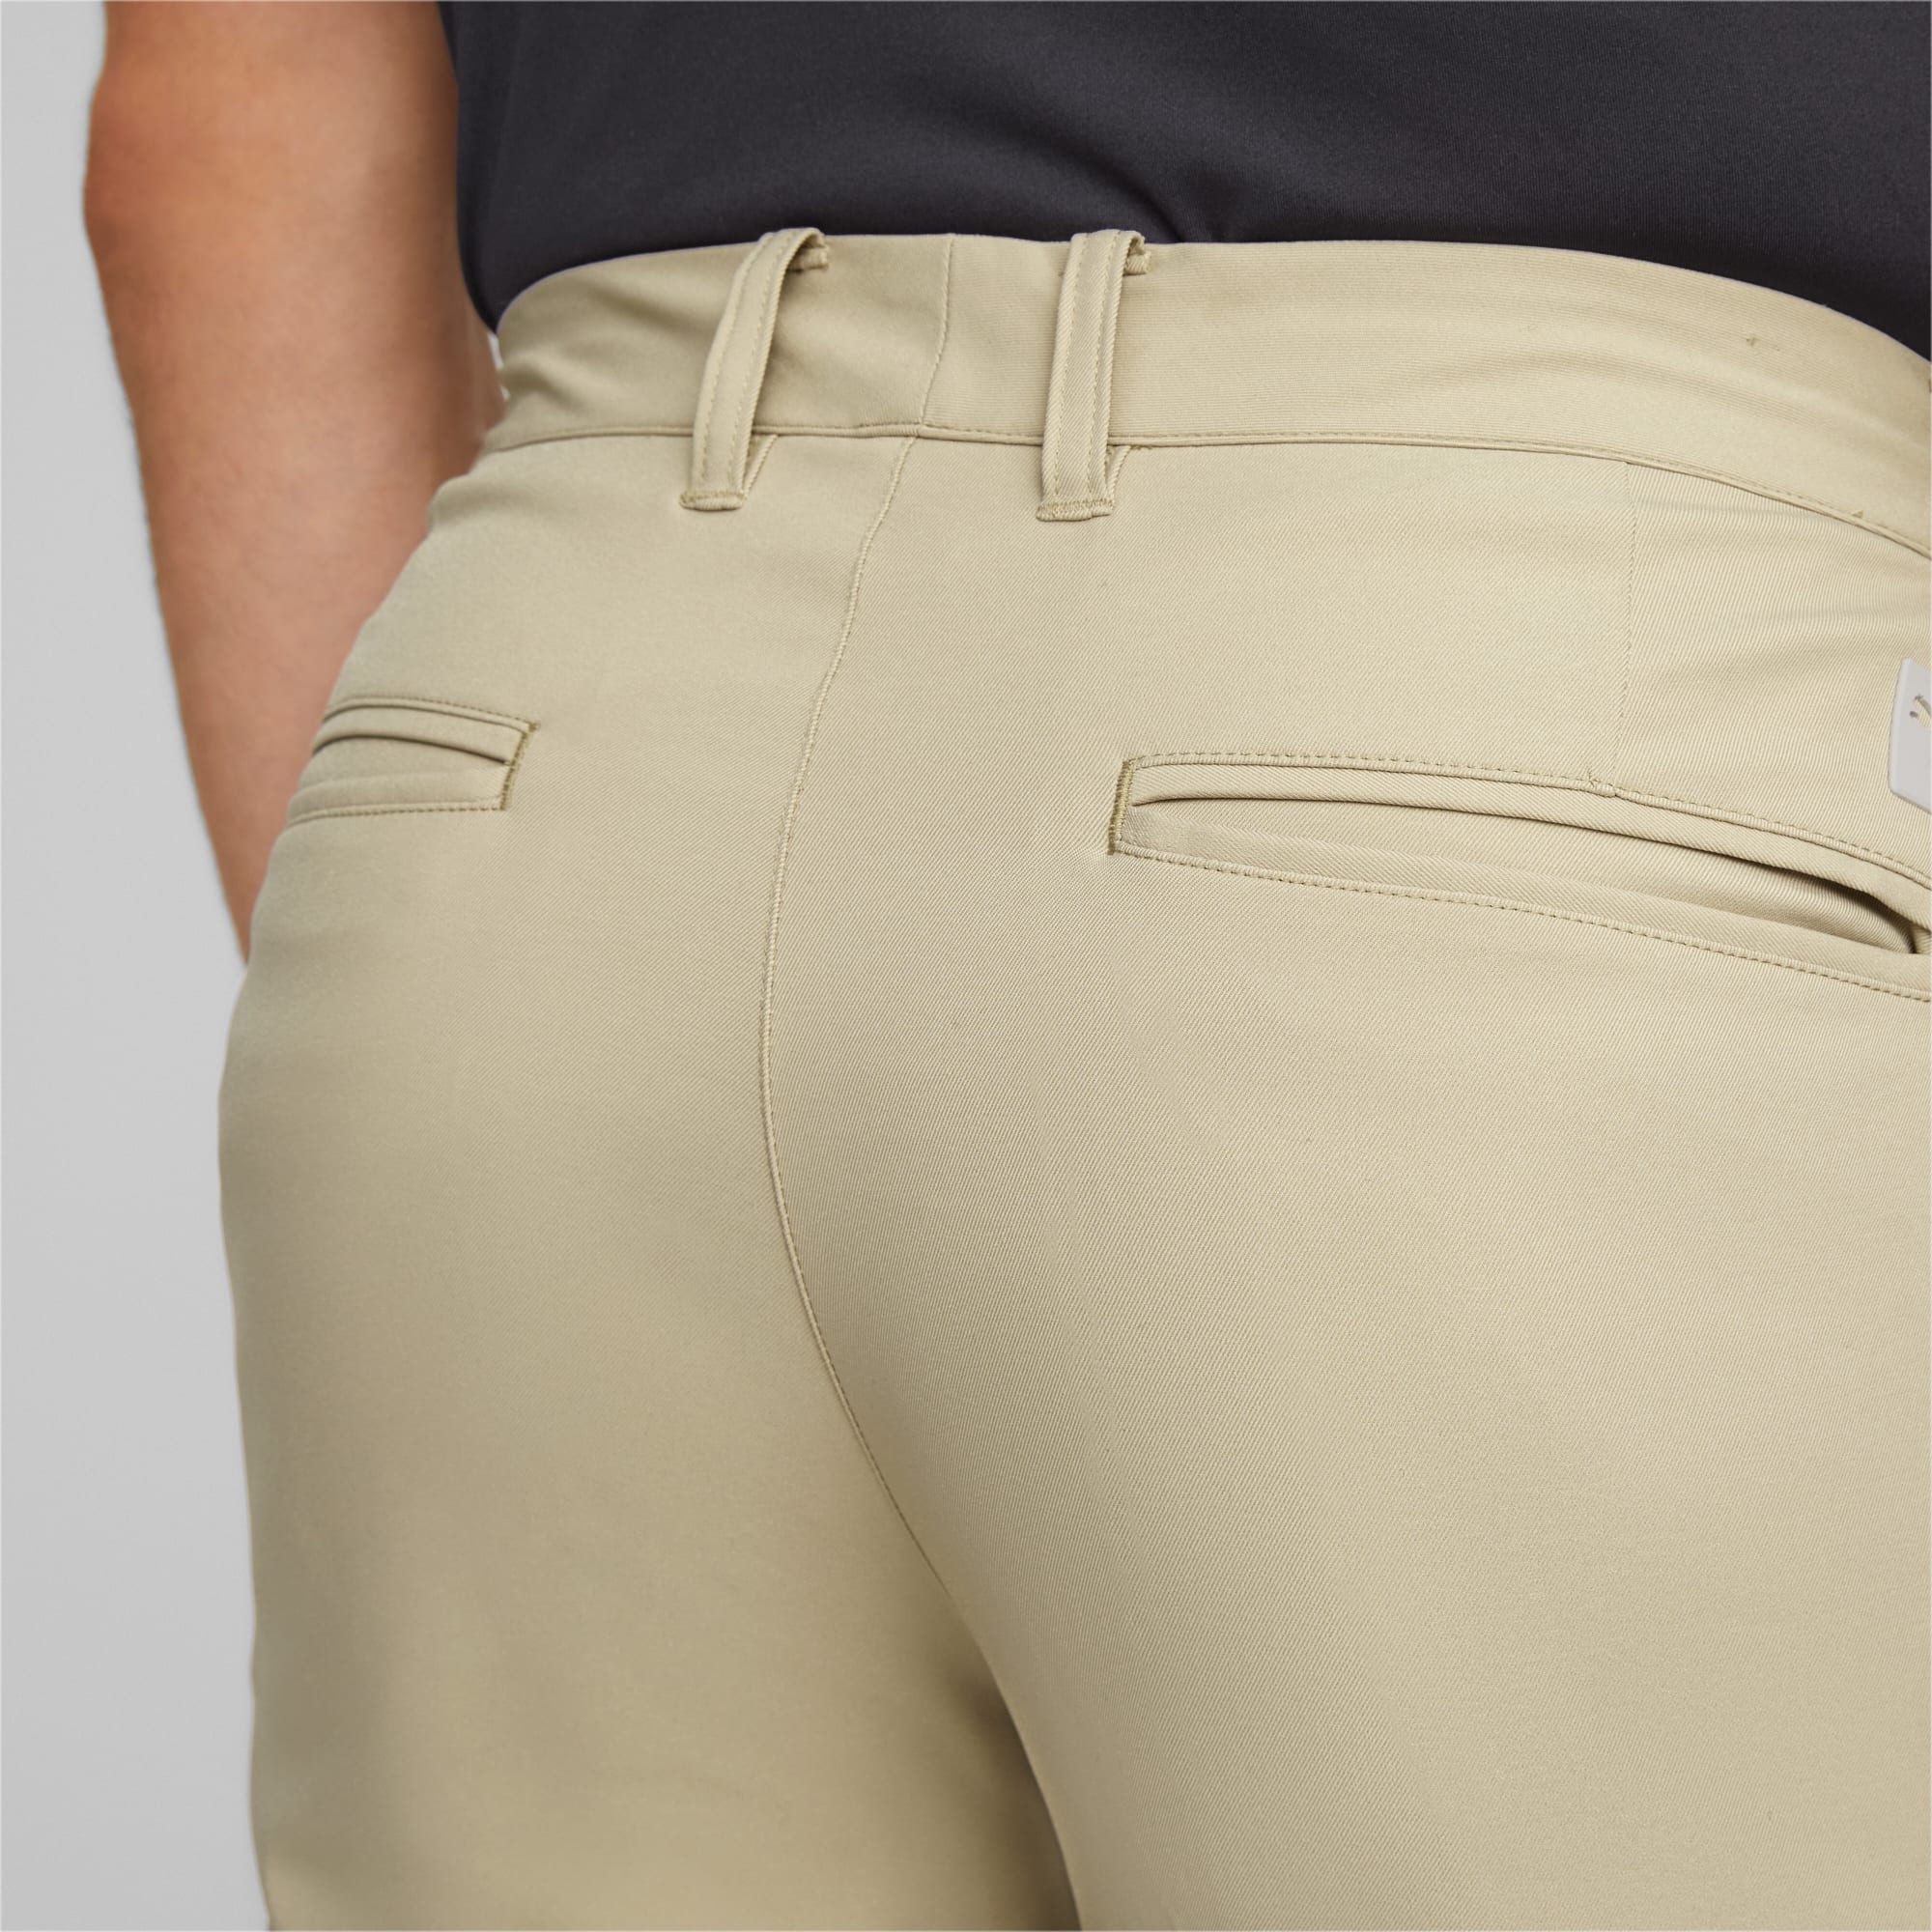 PUMA Dealer Tailored Golf Pants Men, Alabaster, Size 30/30, Clothing